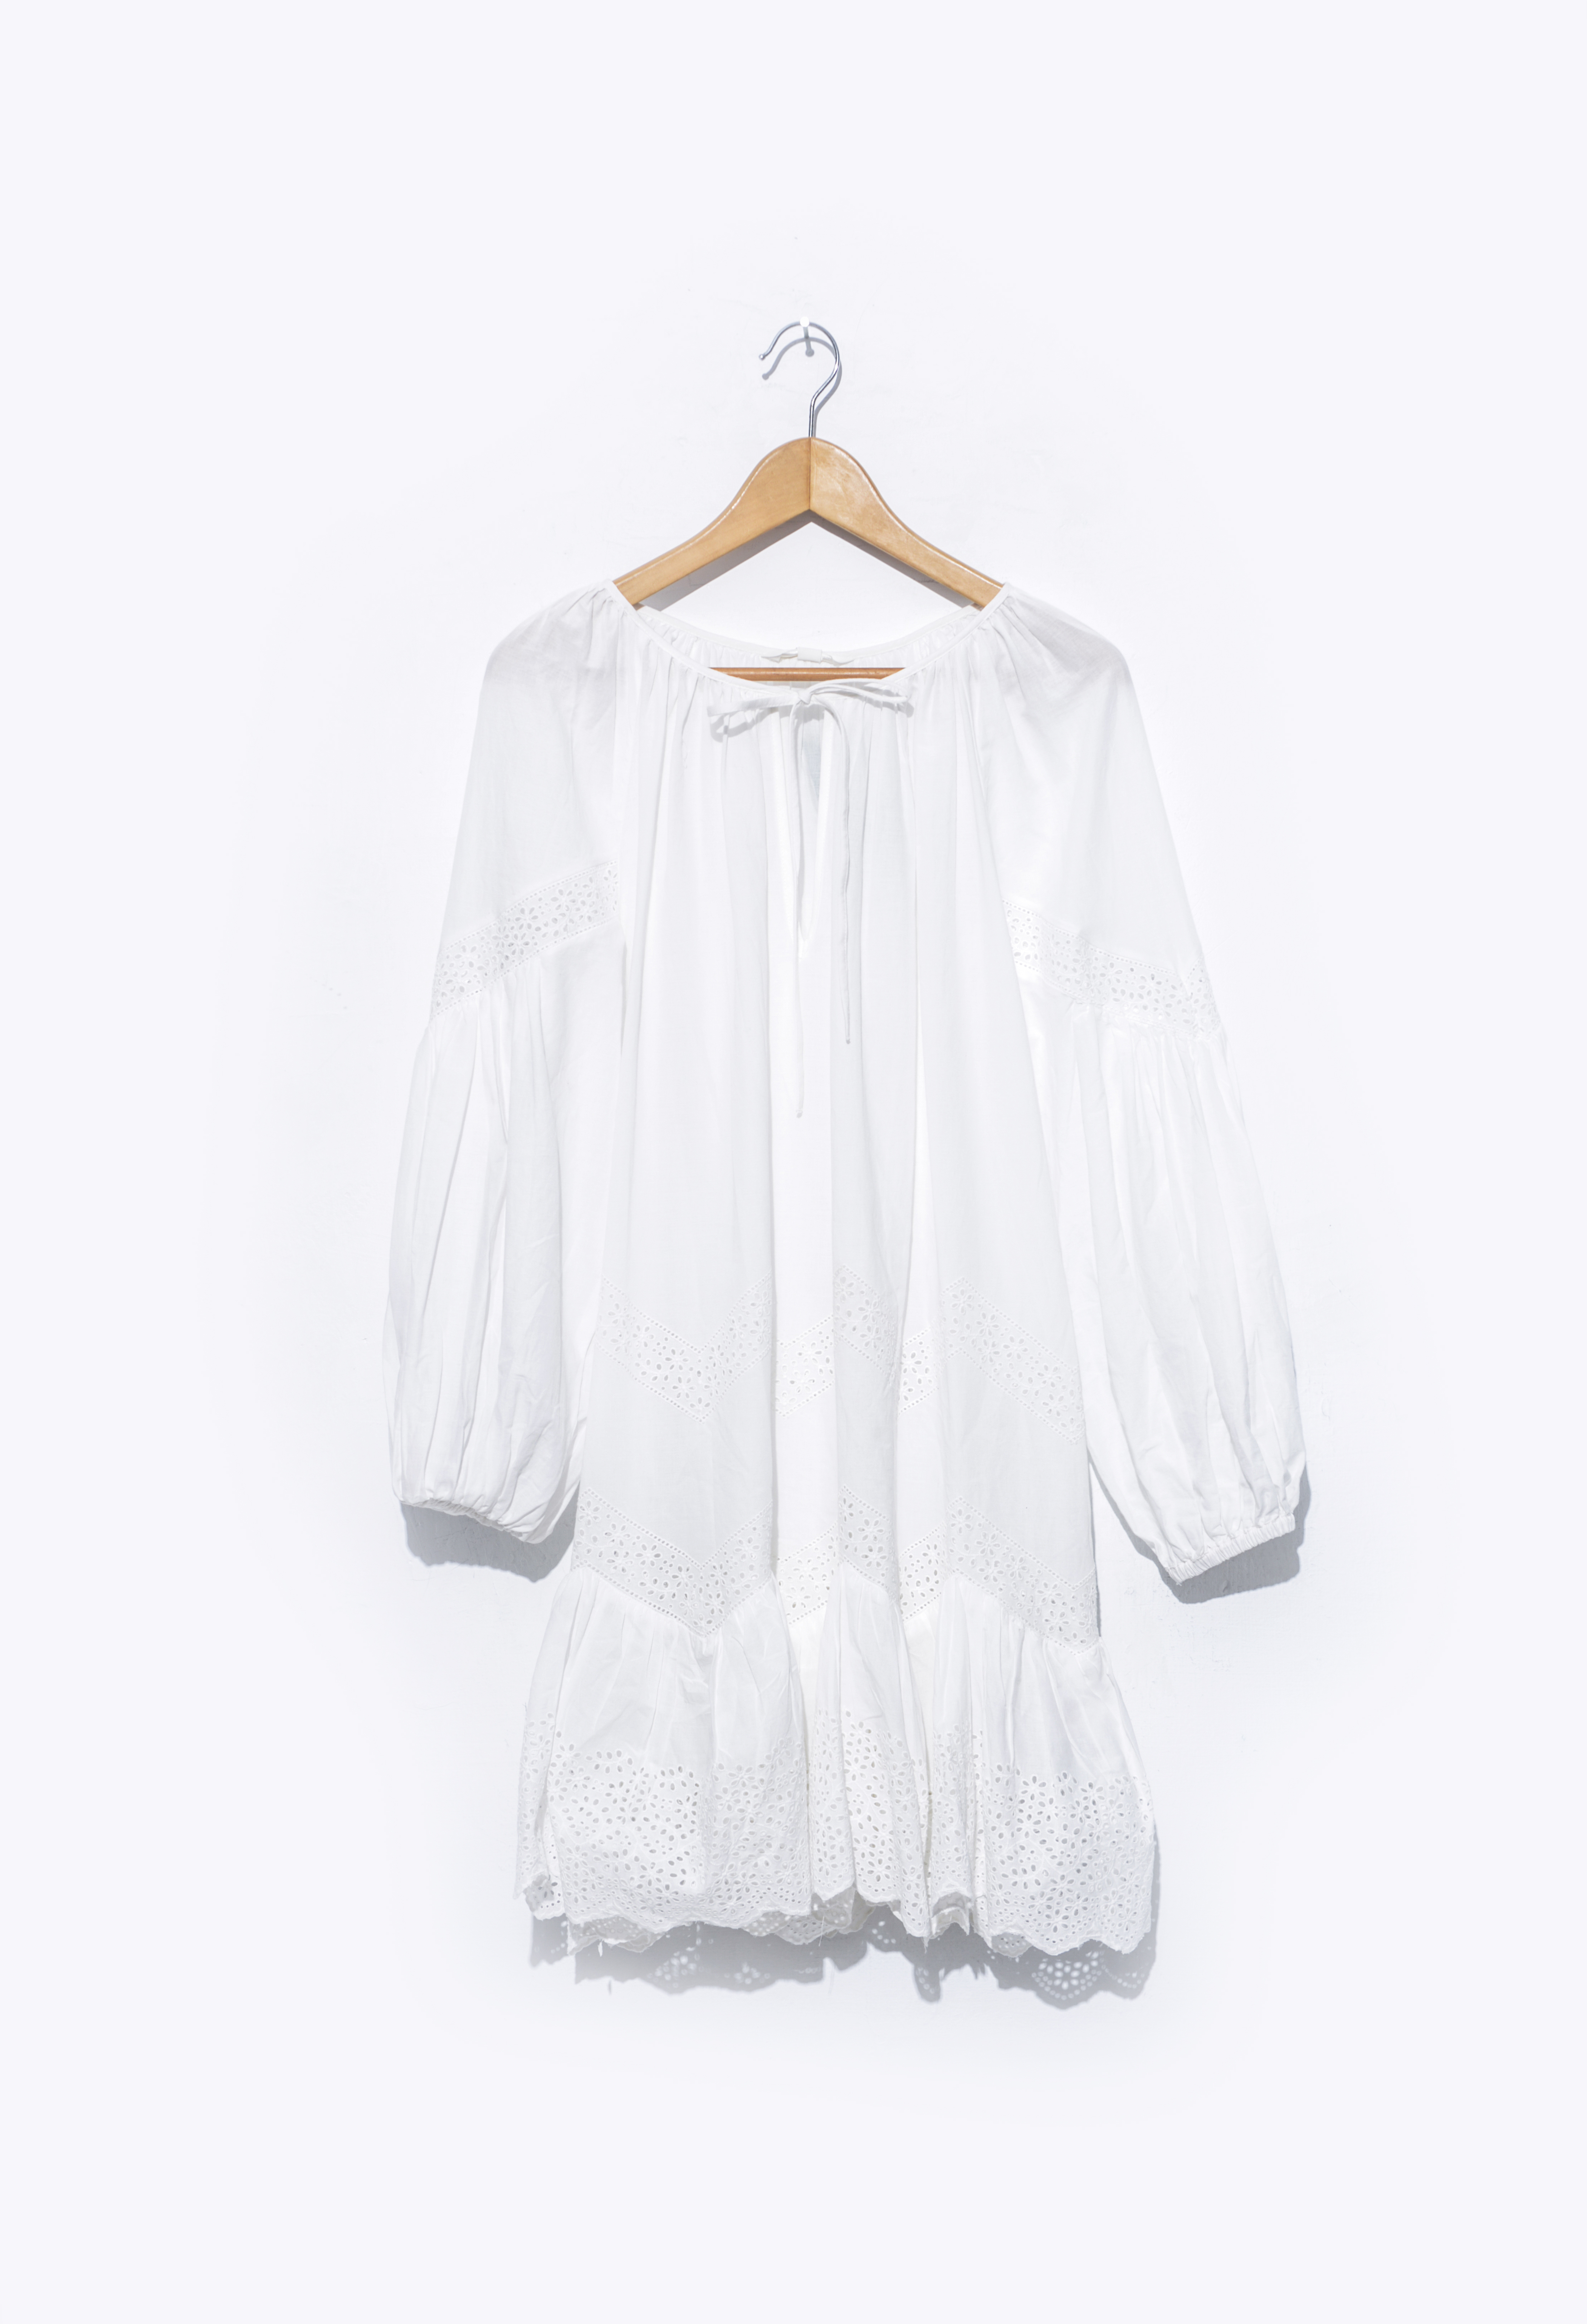 A white dress on a hanger | Source: Shutterstock